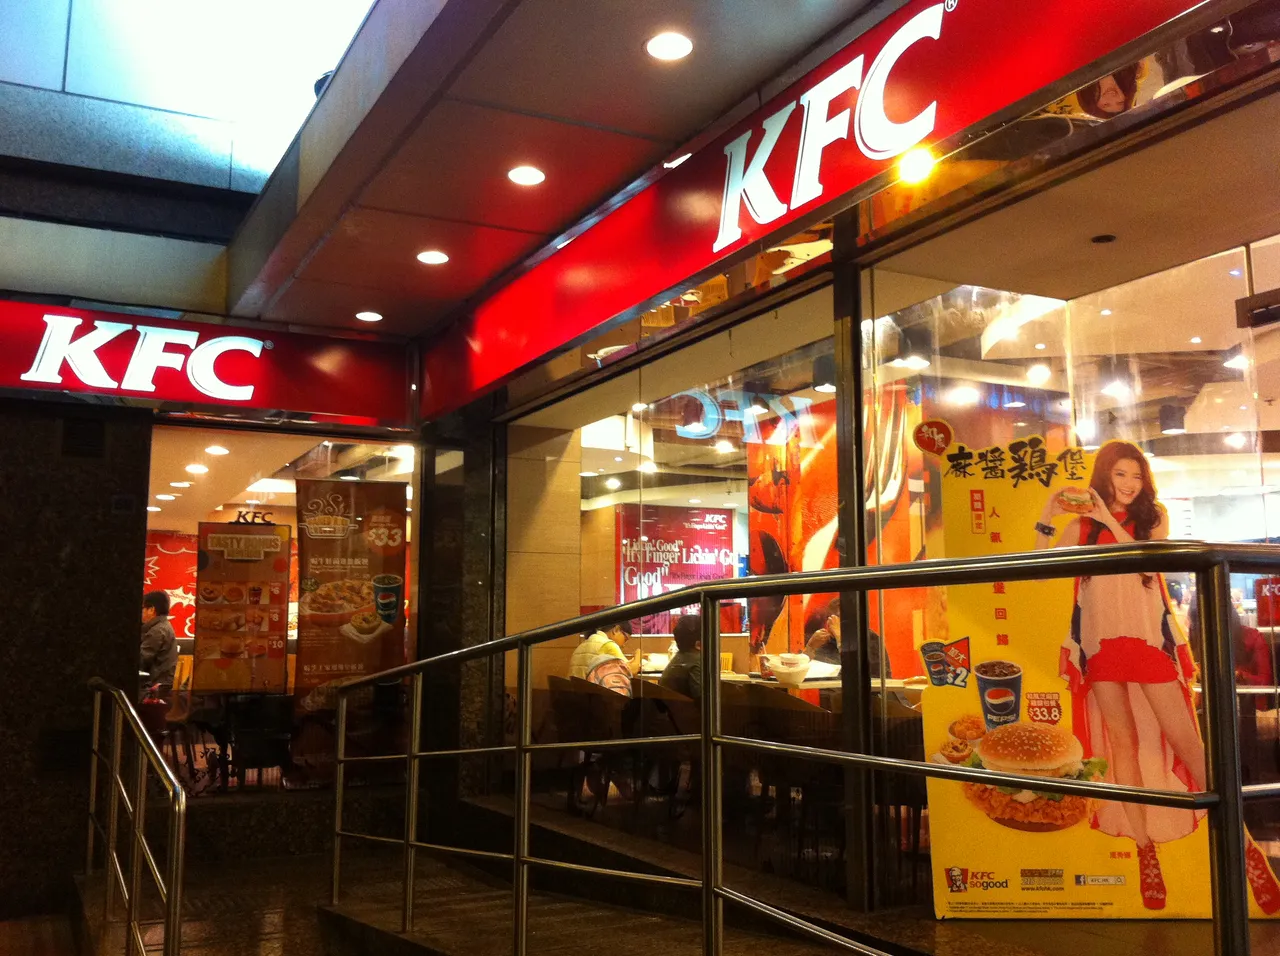 KFC Reinforces its 'So Good' Tagline Through The KFC Friend-Meter Campaign